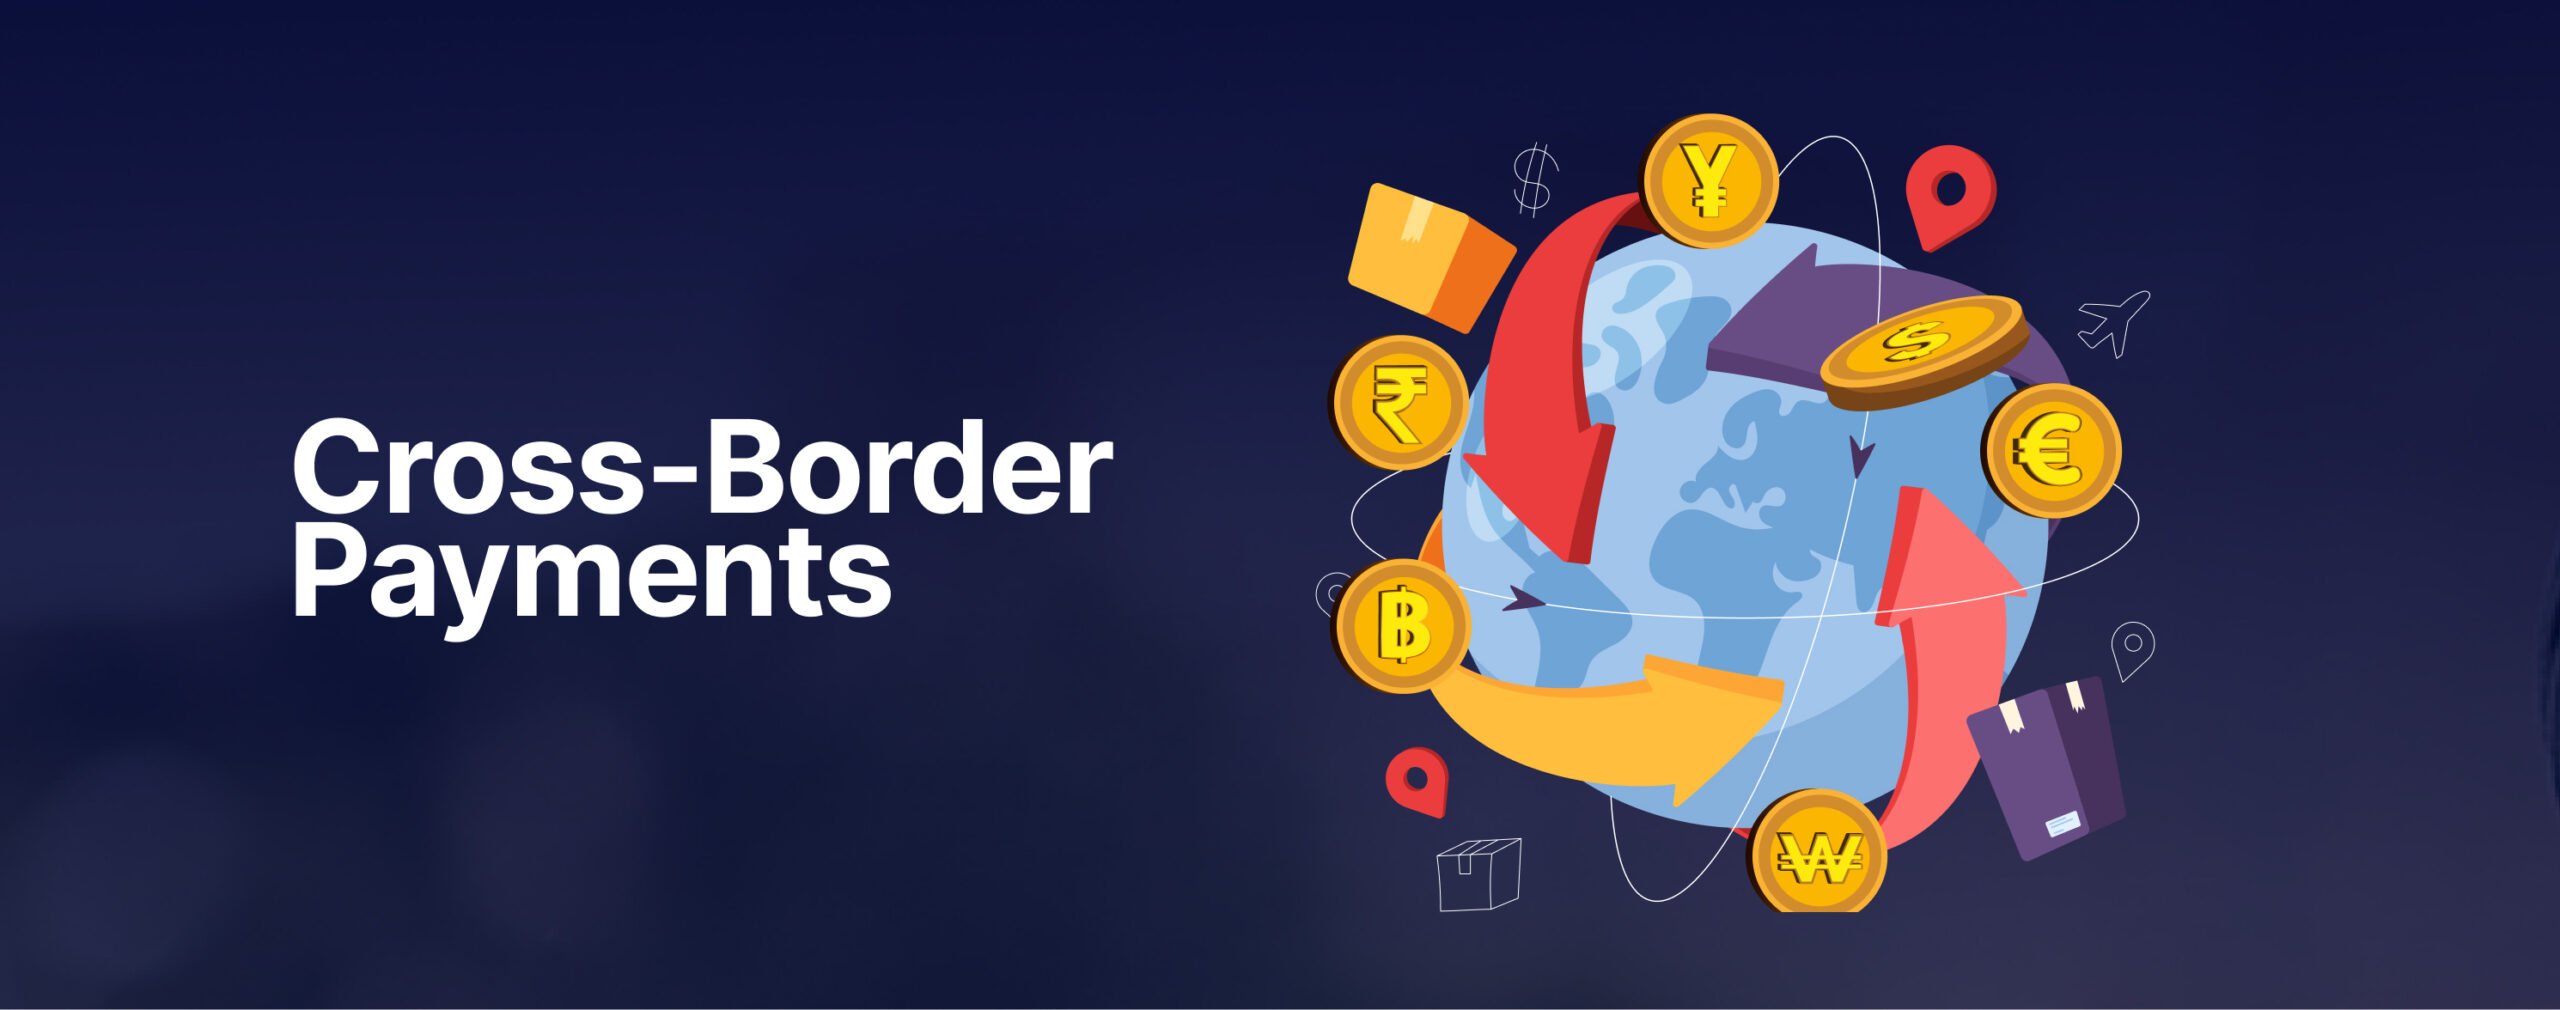 Cross-Border-Payments